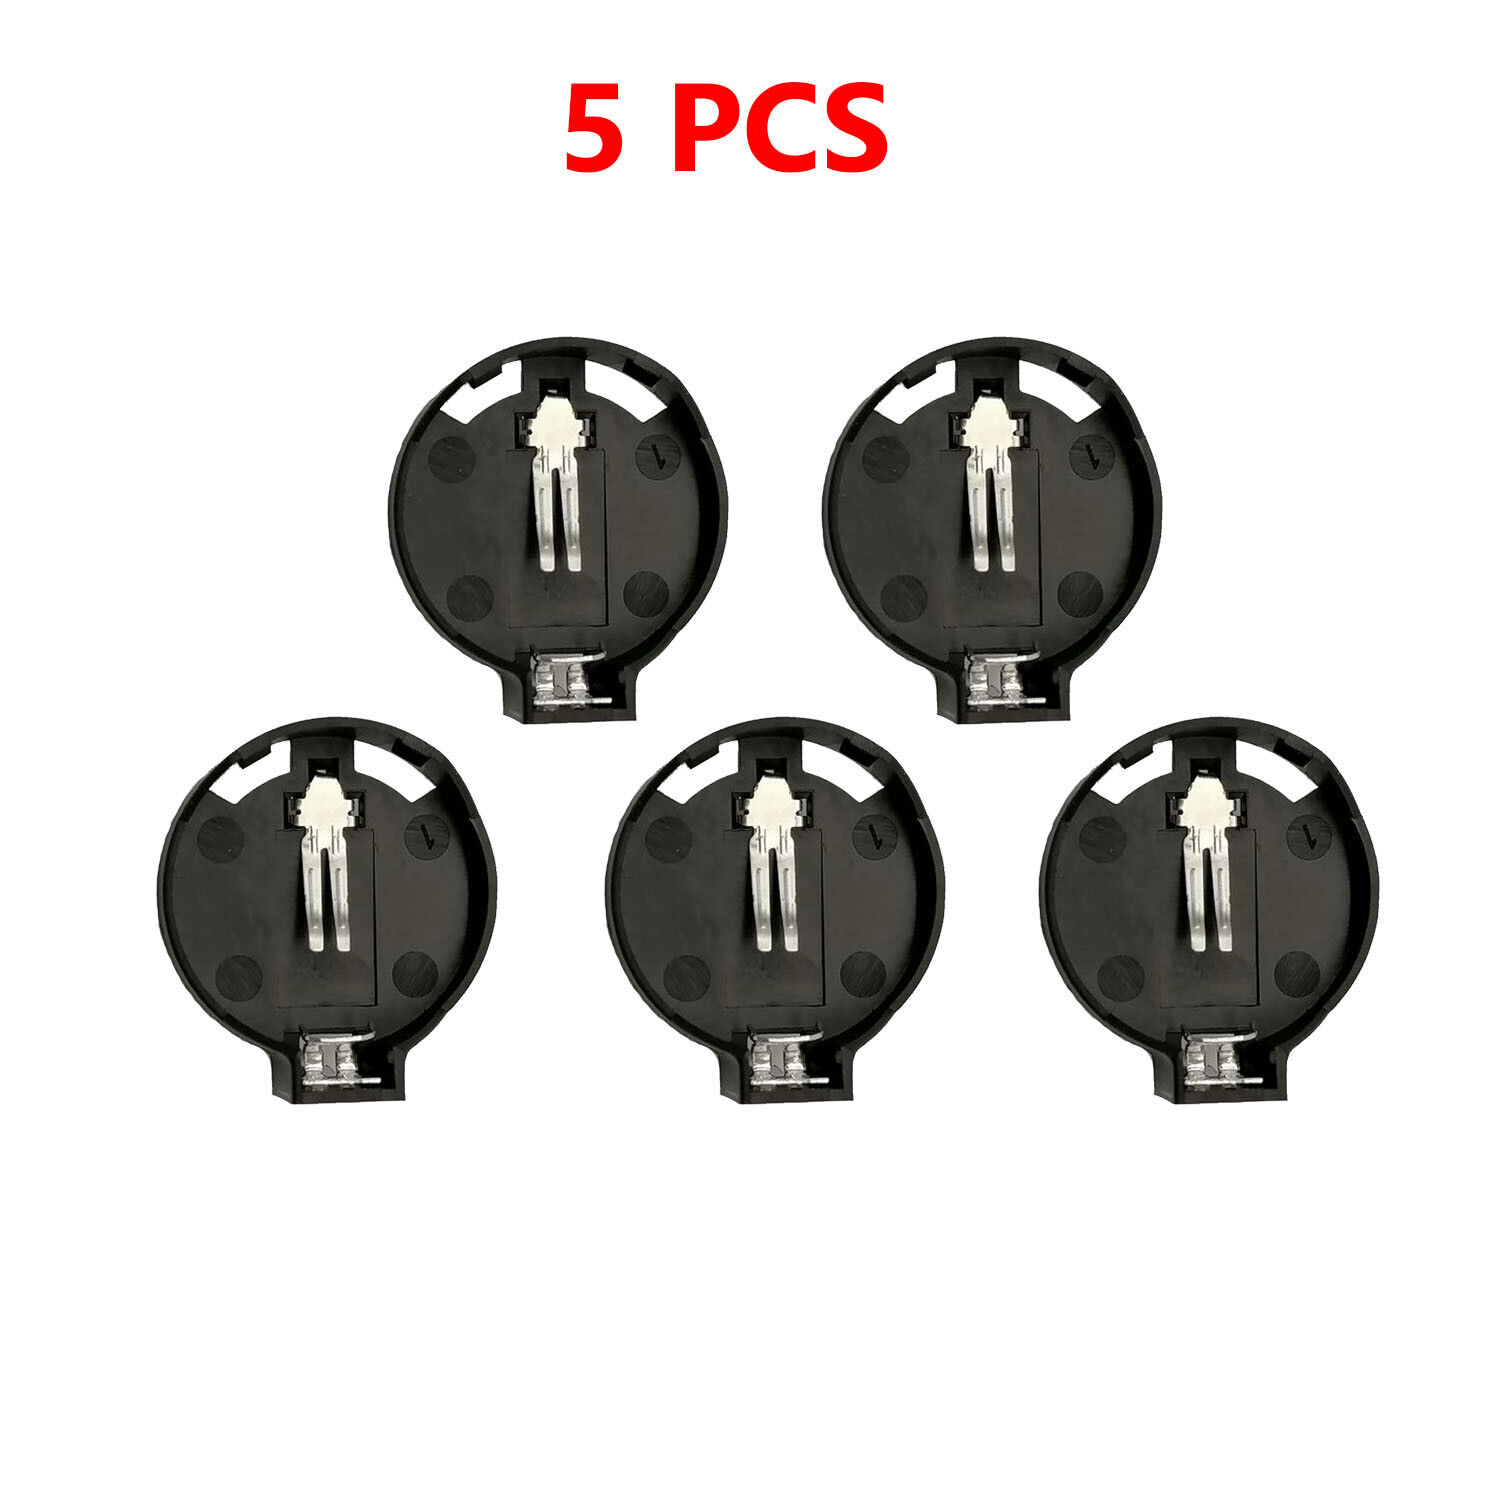 5PCS Round Button Coin Cell Battery Socket Holder Case for CR2032/CR2025 3V